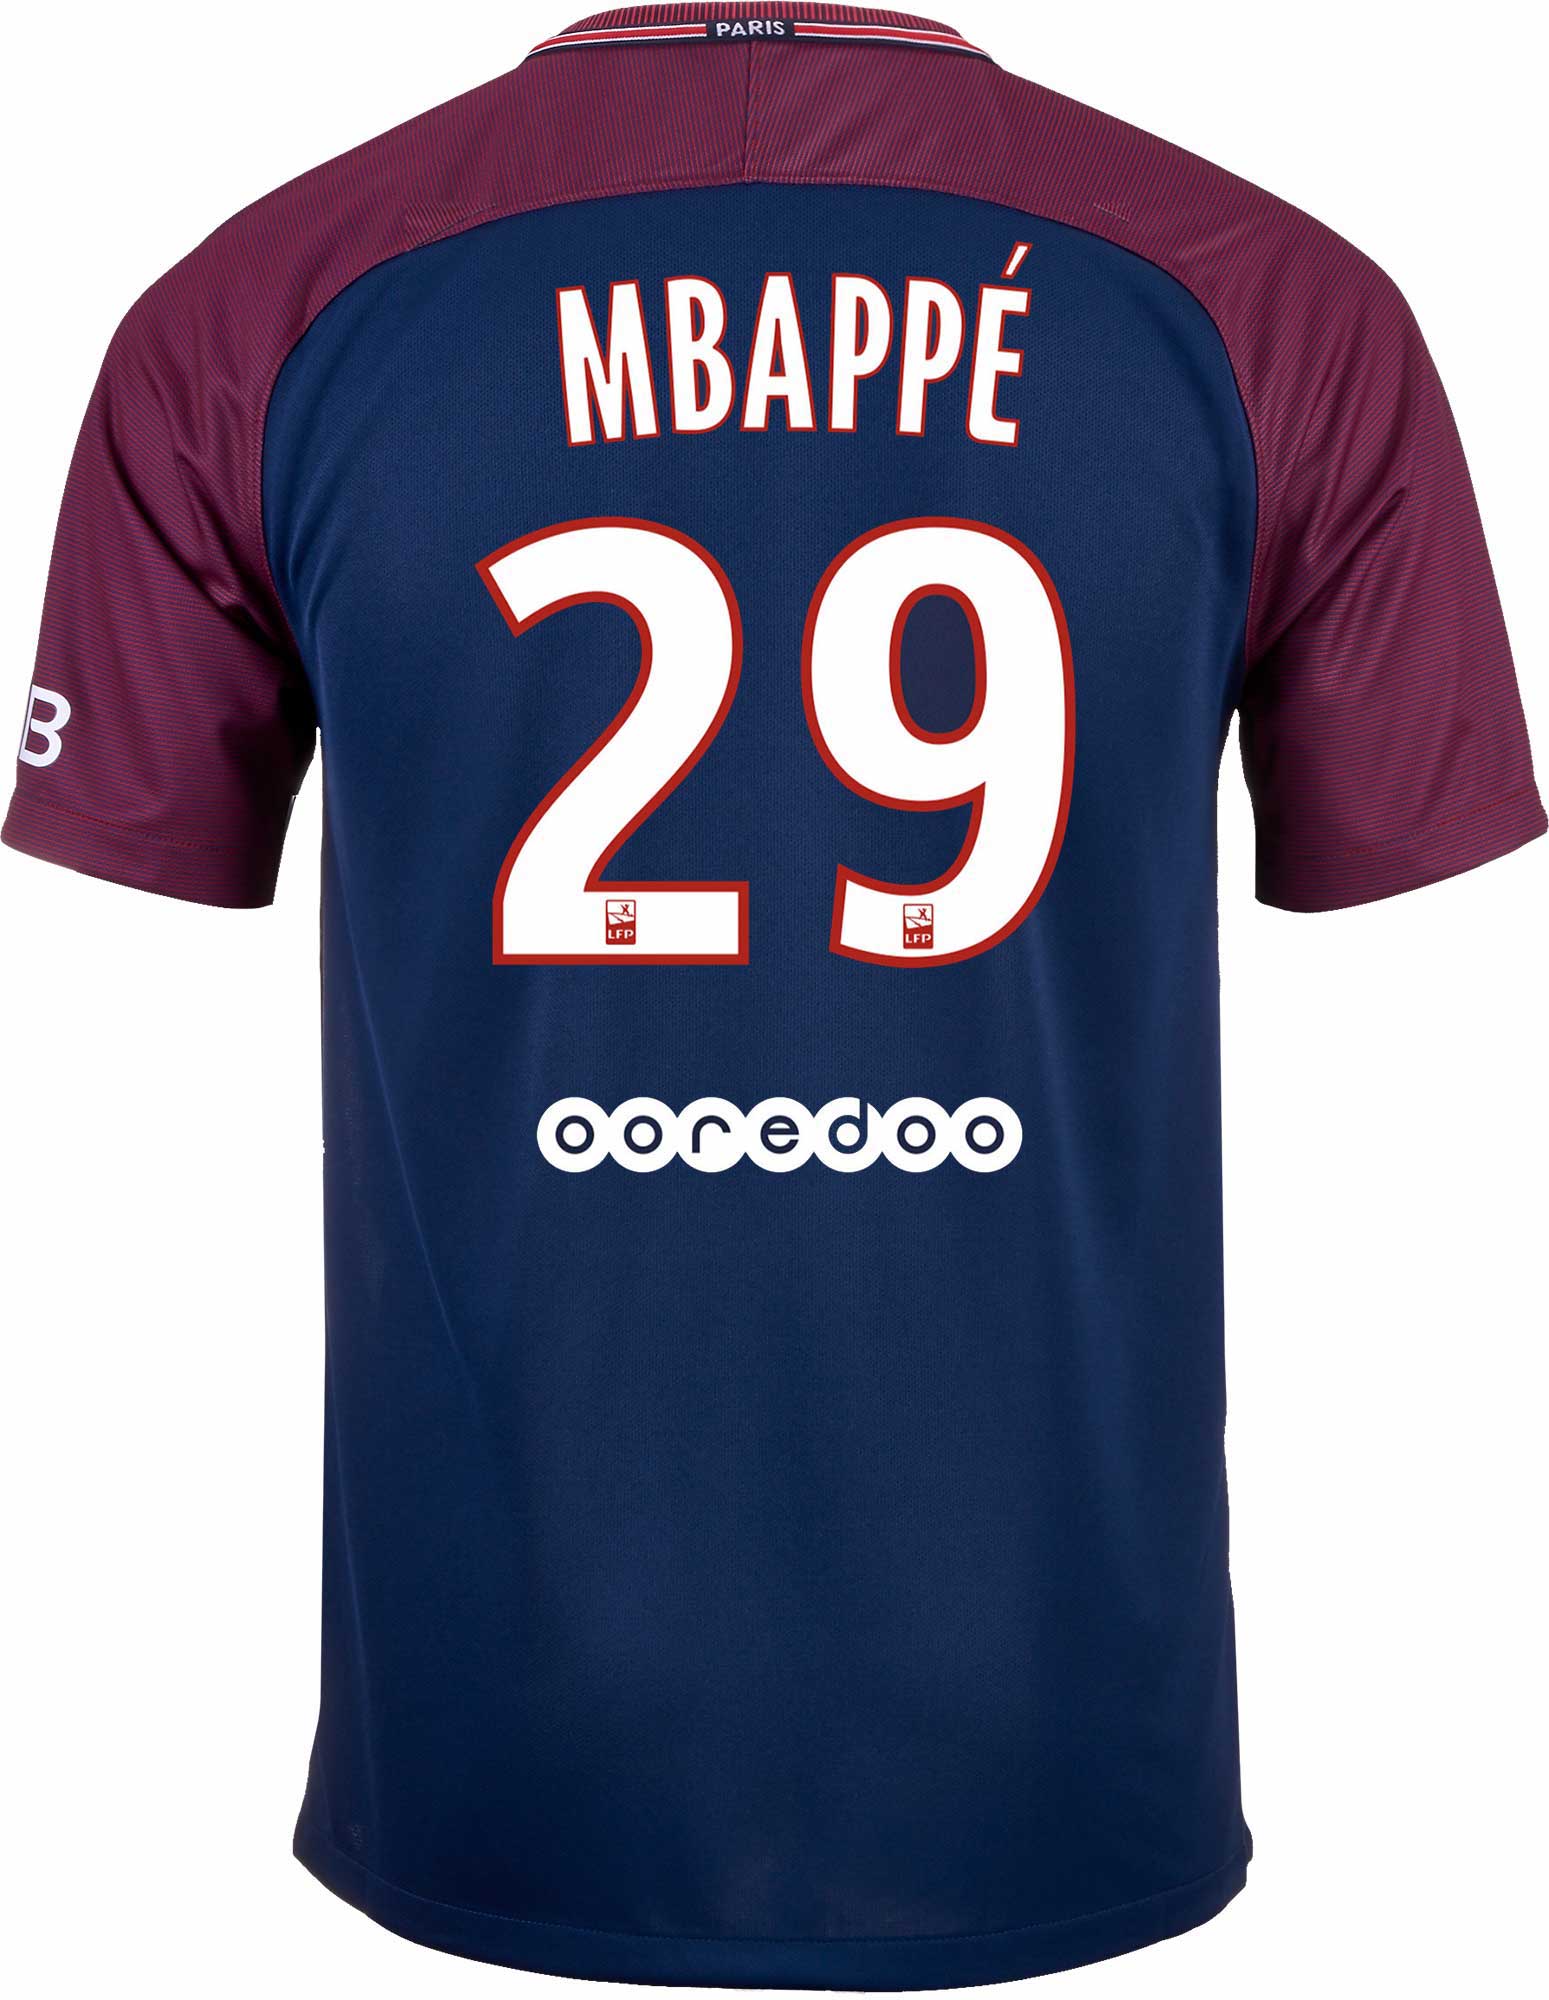 mbappe jerseys